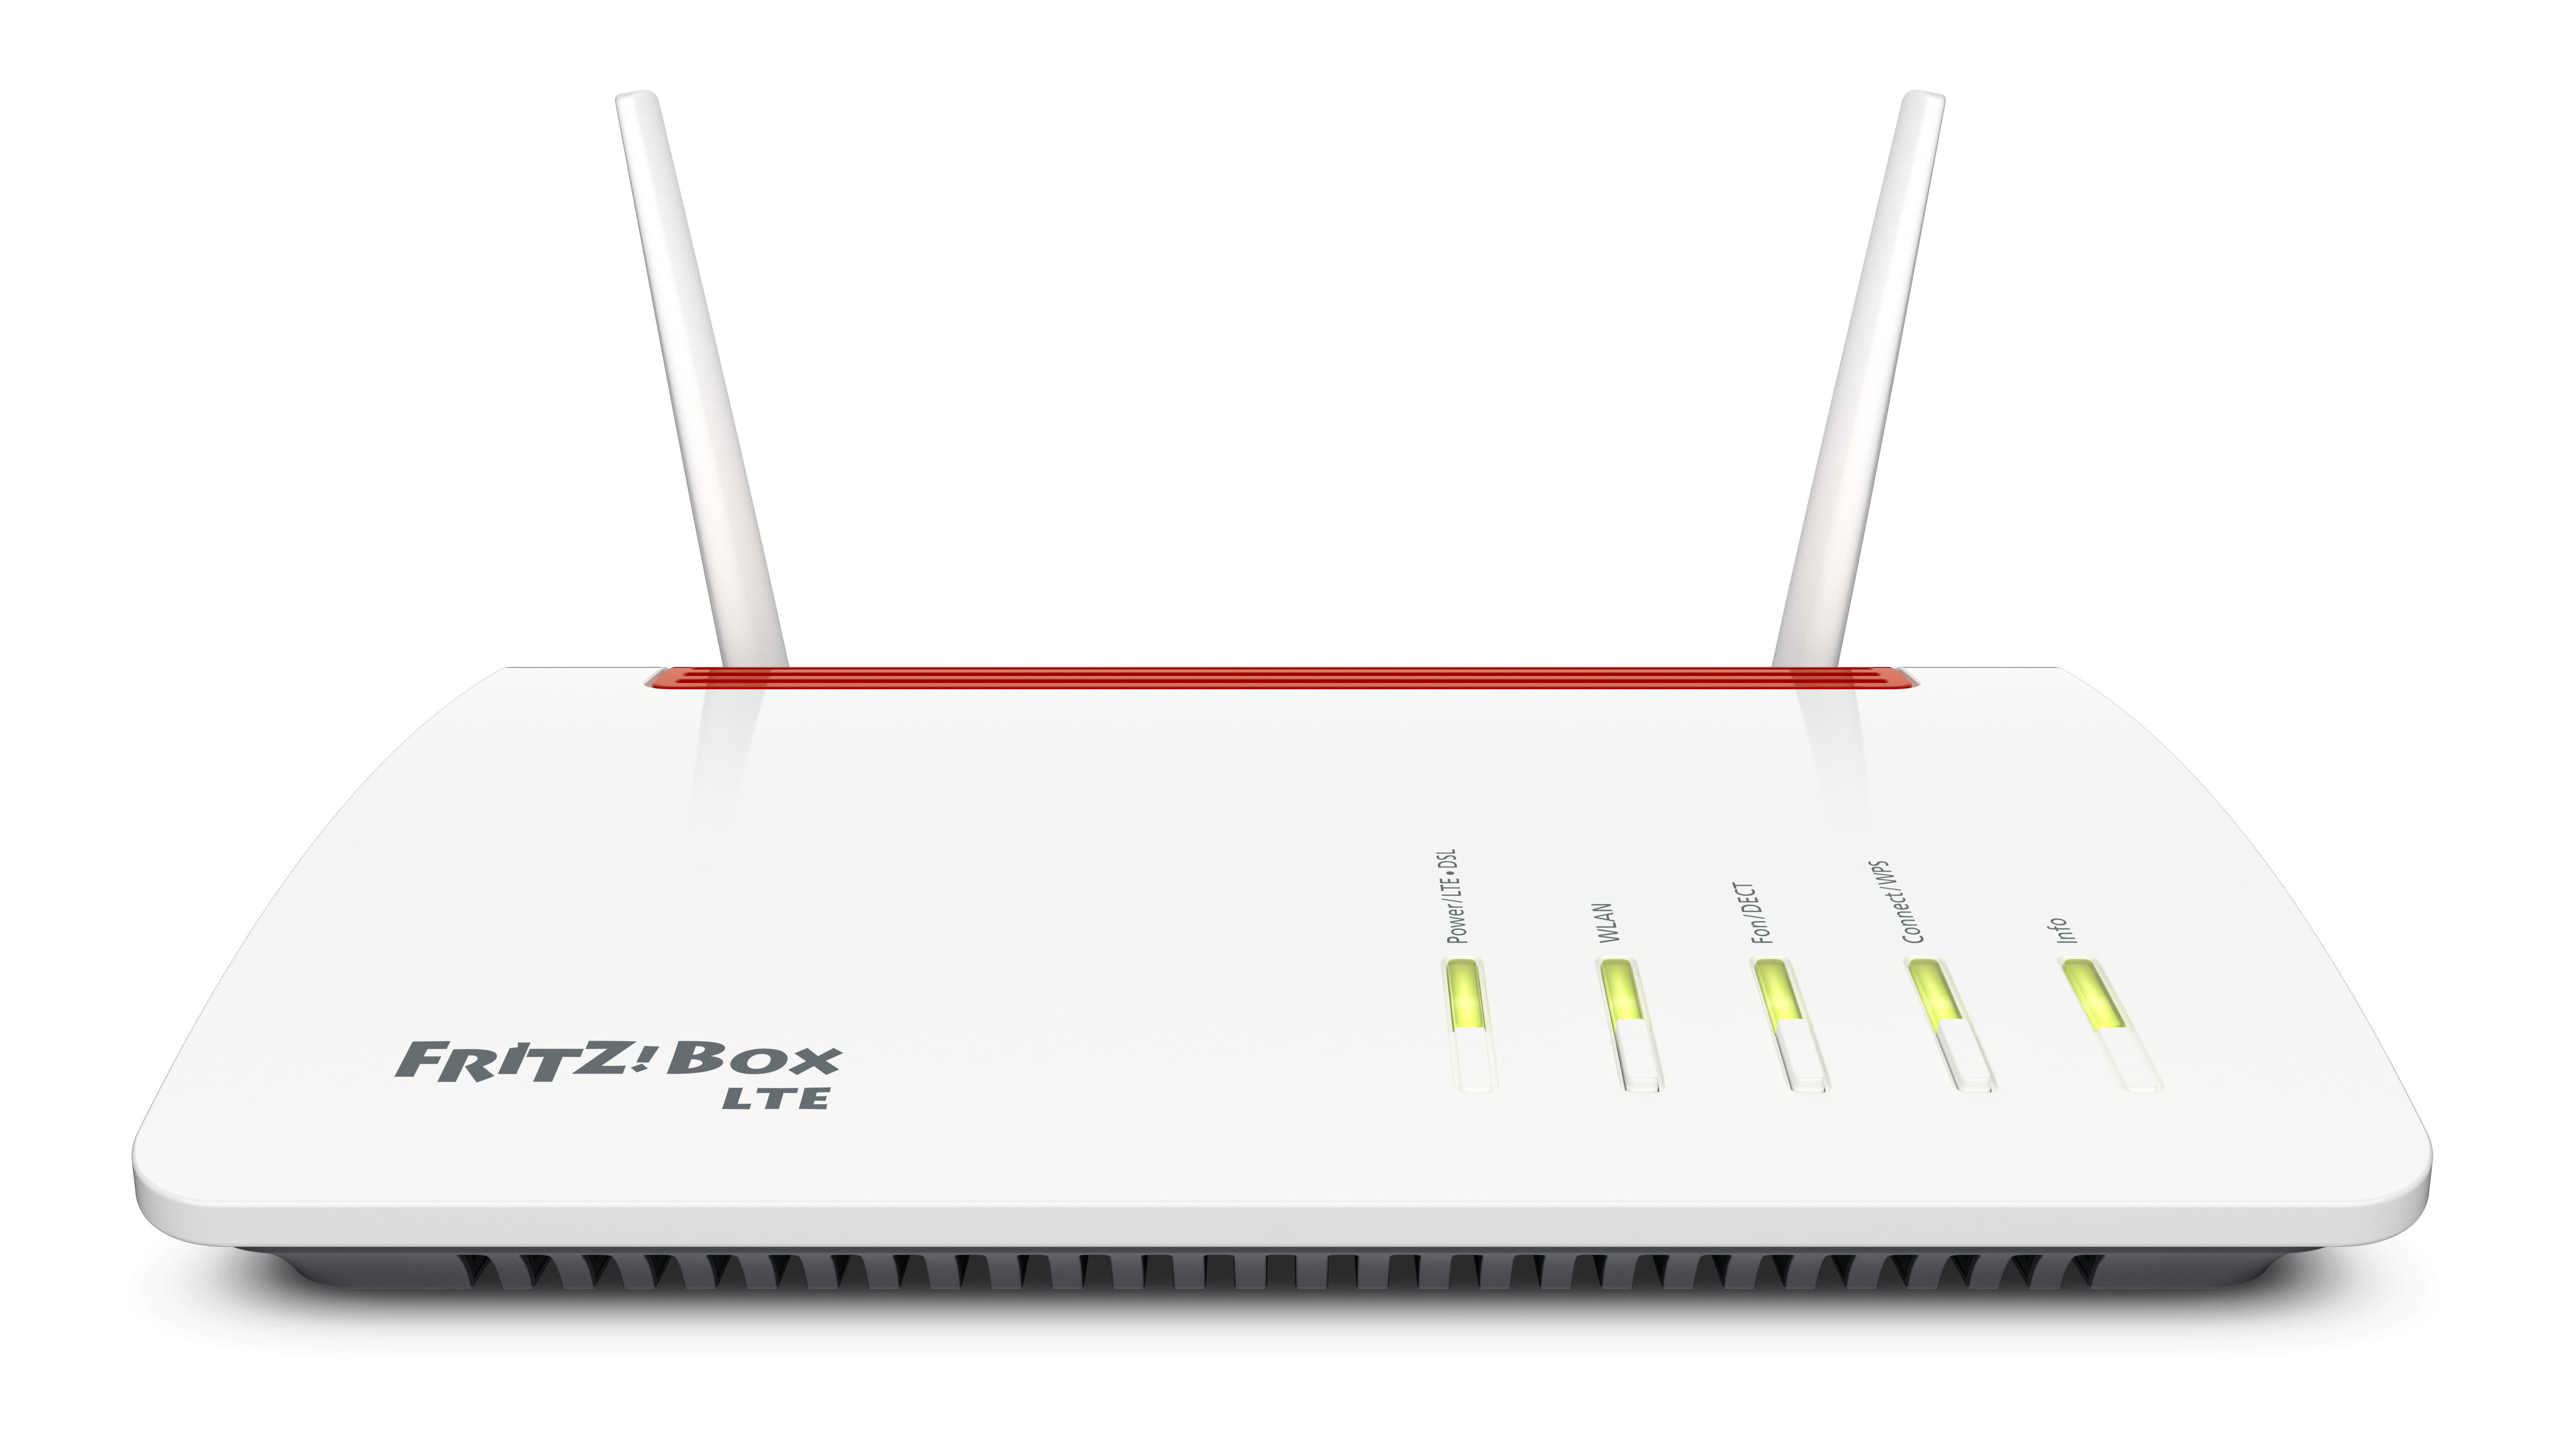 FRITZ!Box 6890 LTE modem/router